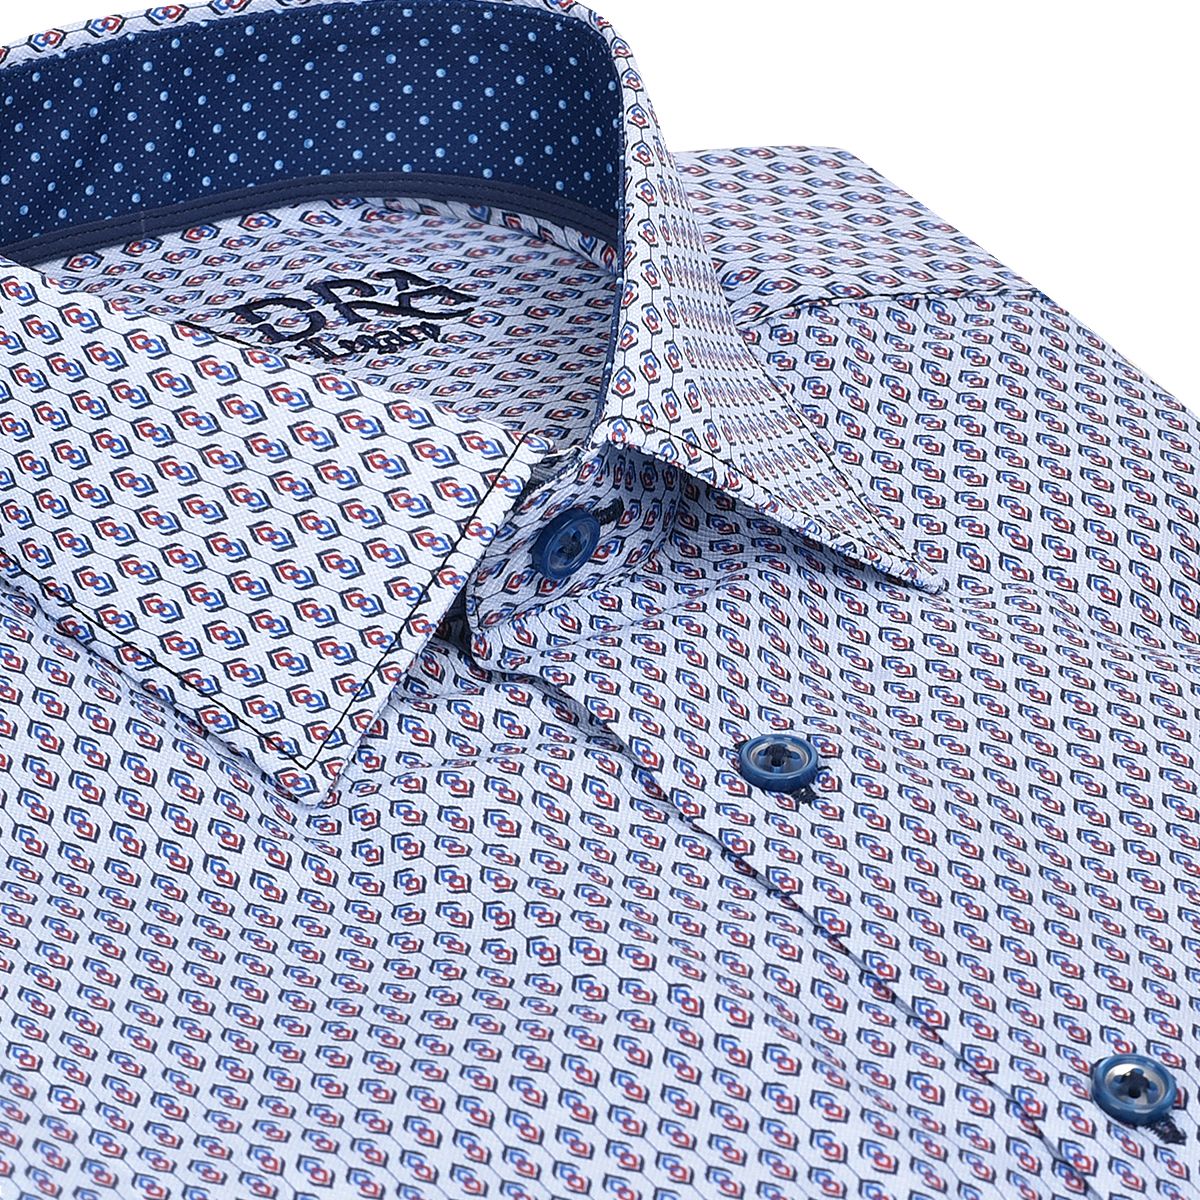 CM0W547 - Cuadra blue fashion soft cotton abstract shirt for men-Kuet.us